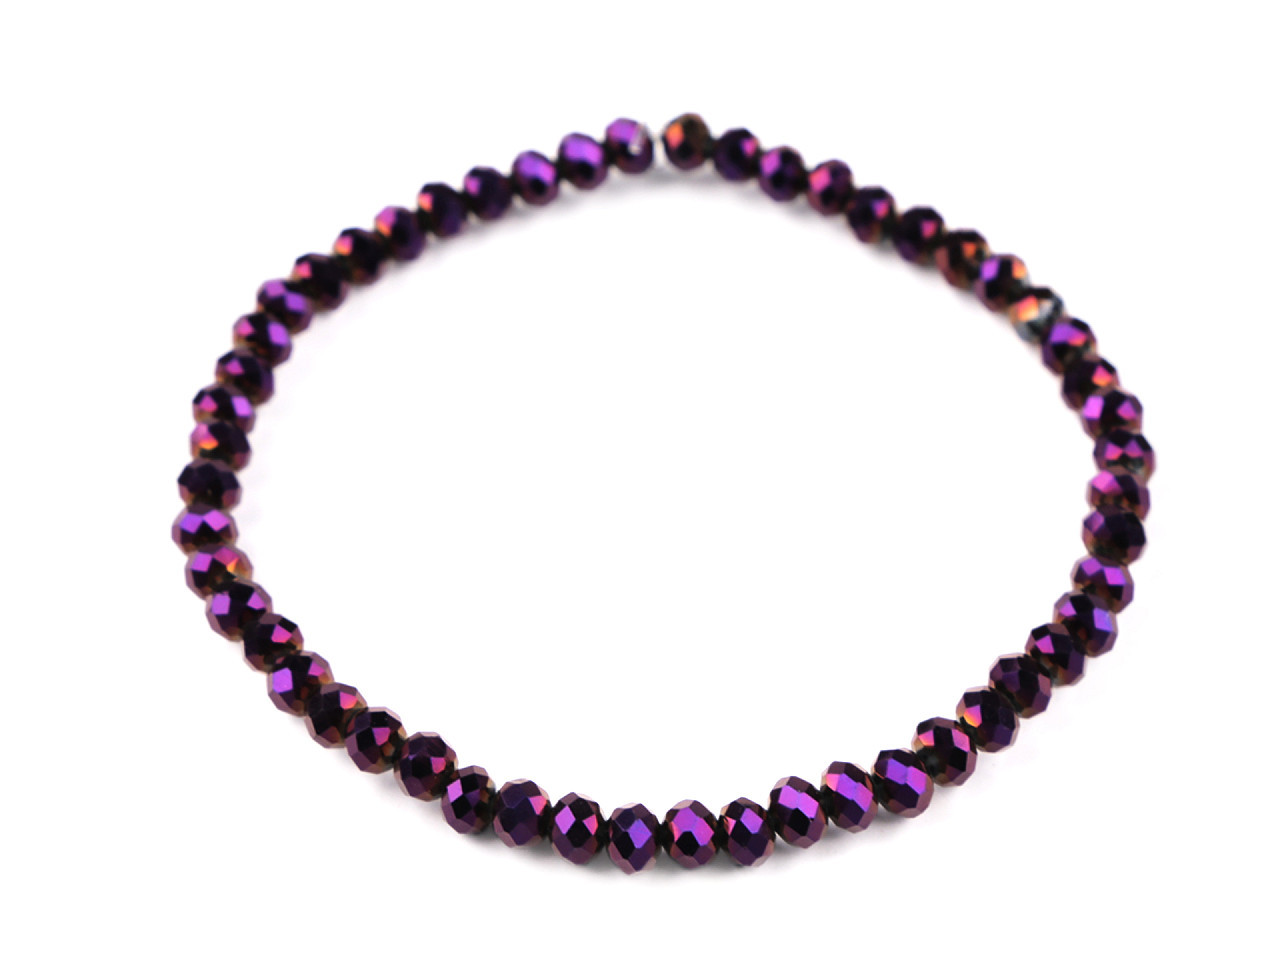 Náramek pružný z broušených korálků, barva 17 fialová purpura